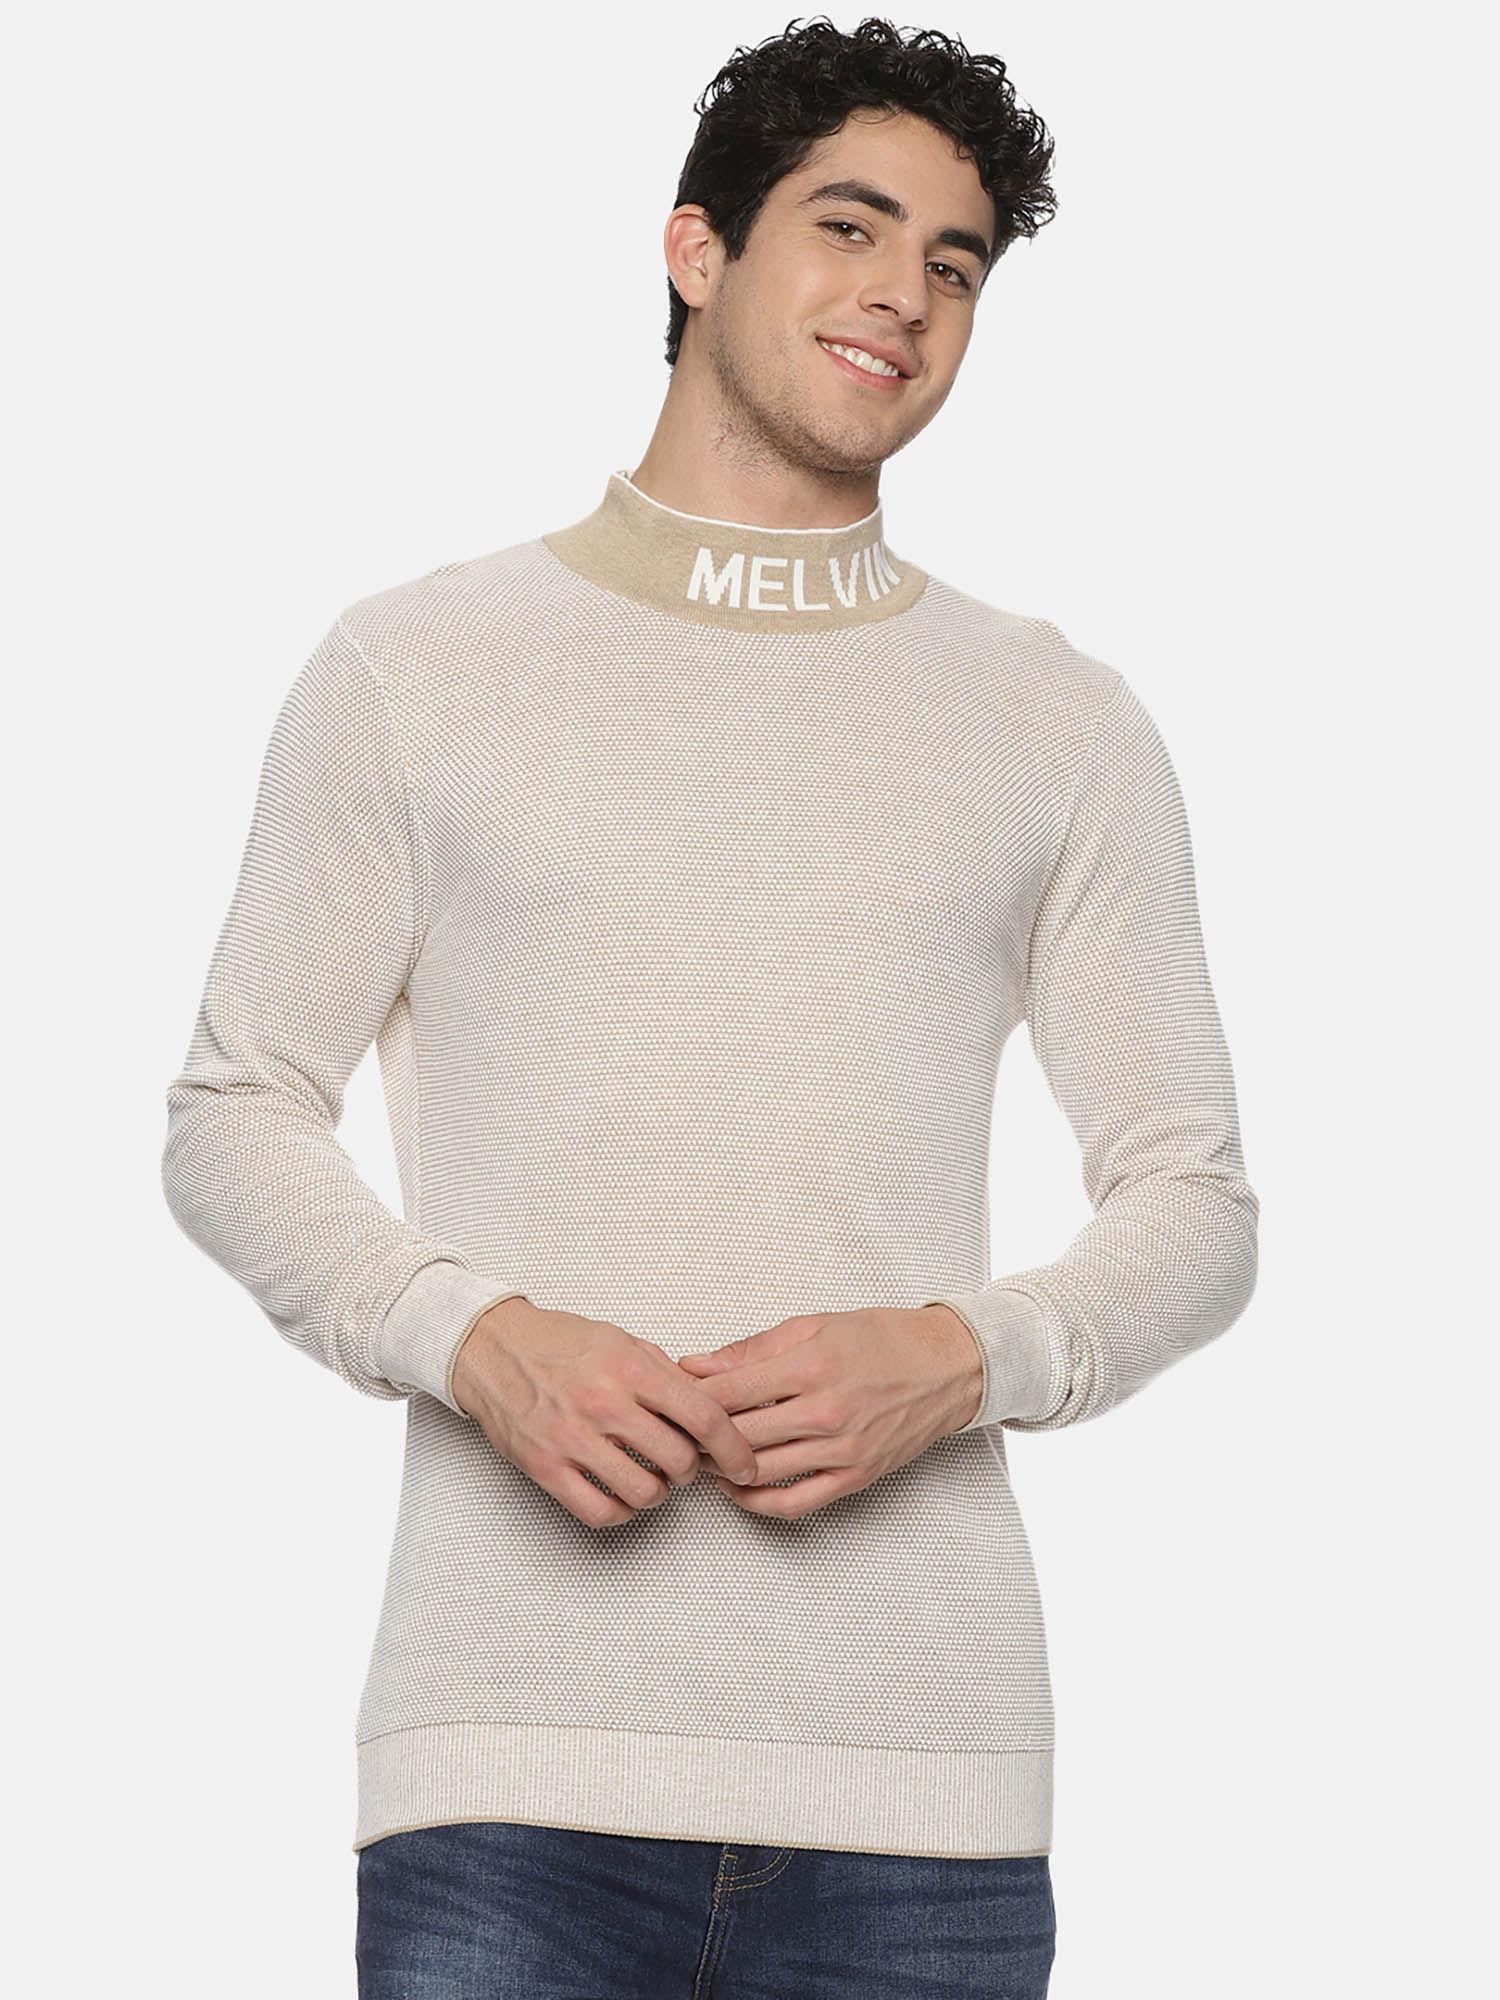 beige-knitted-sweatshirt